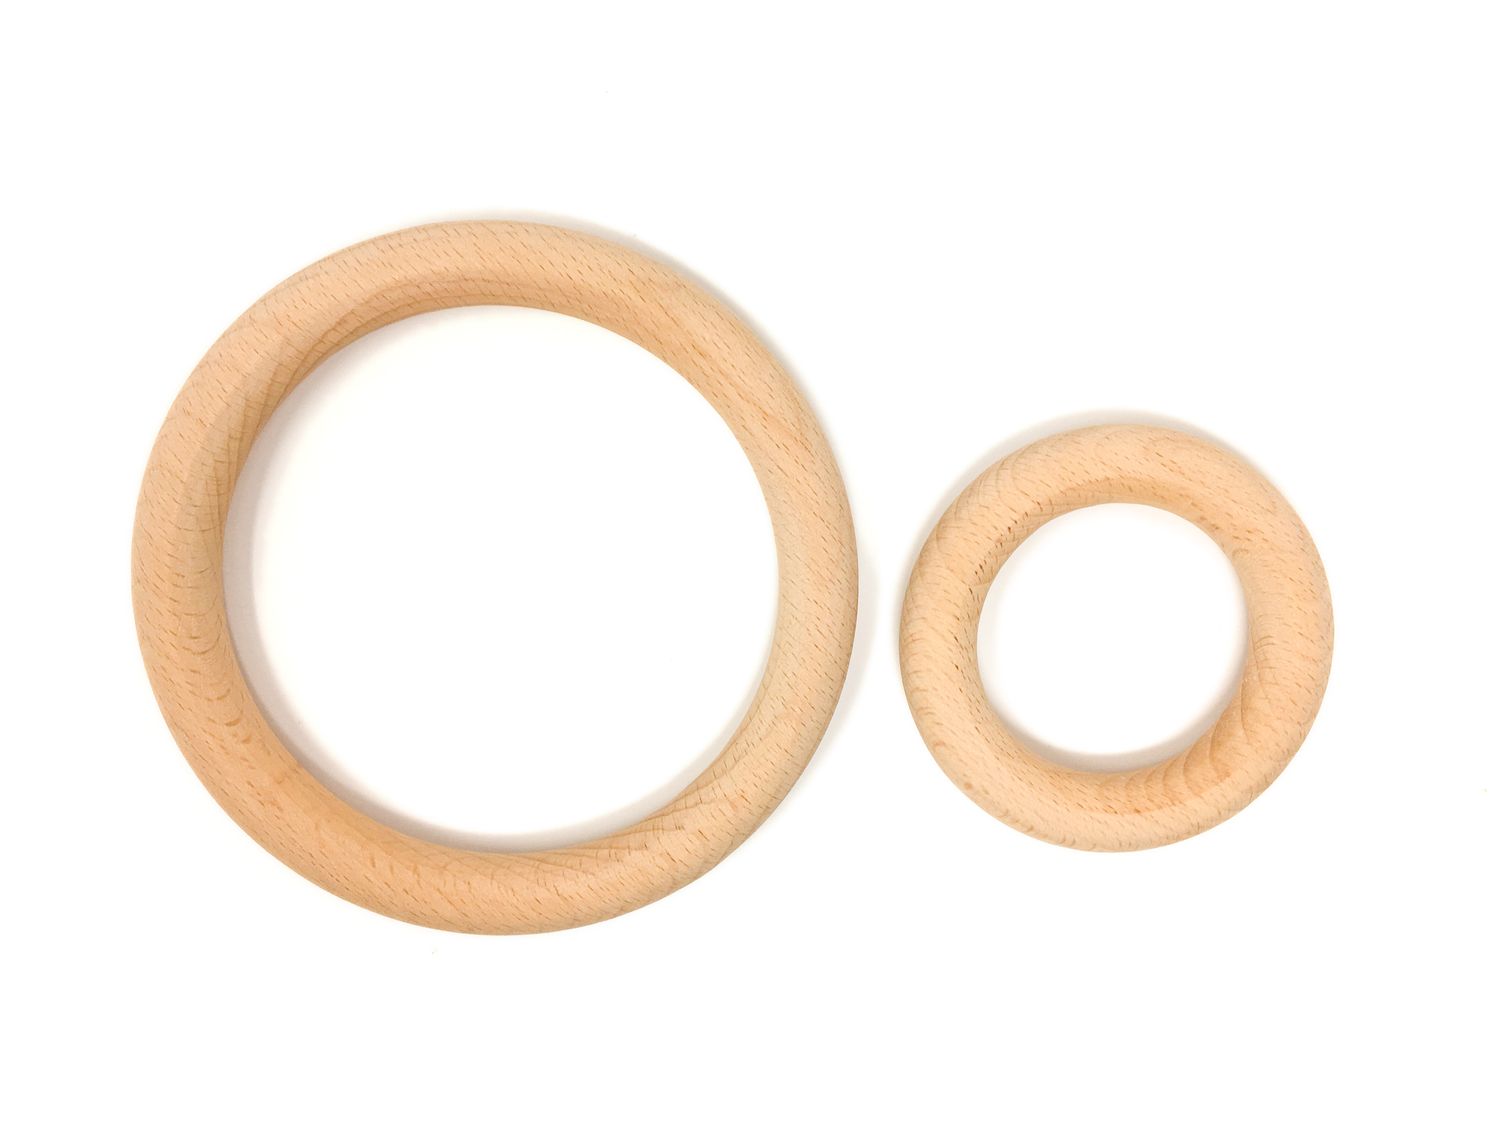 Grapat houten speelgoed 3 ringen, klein